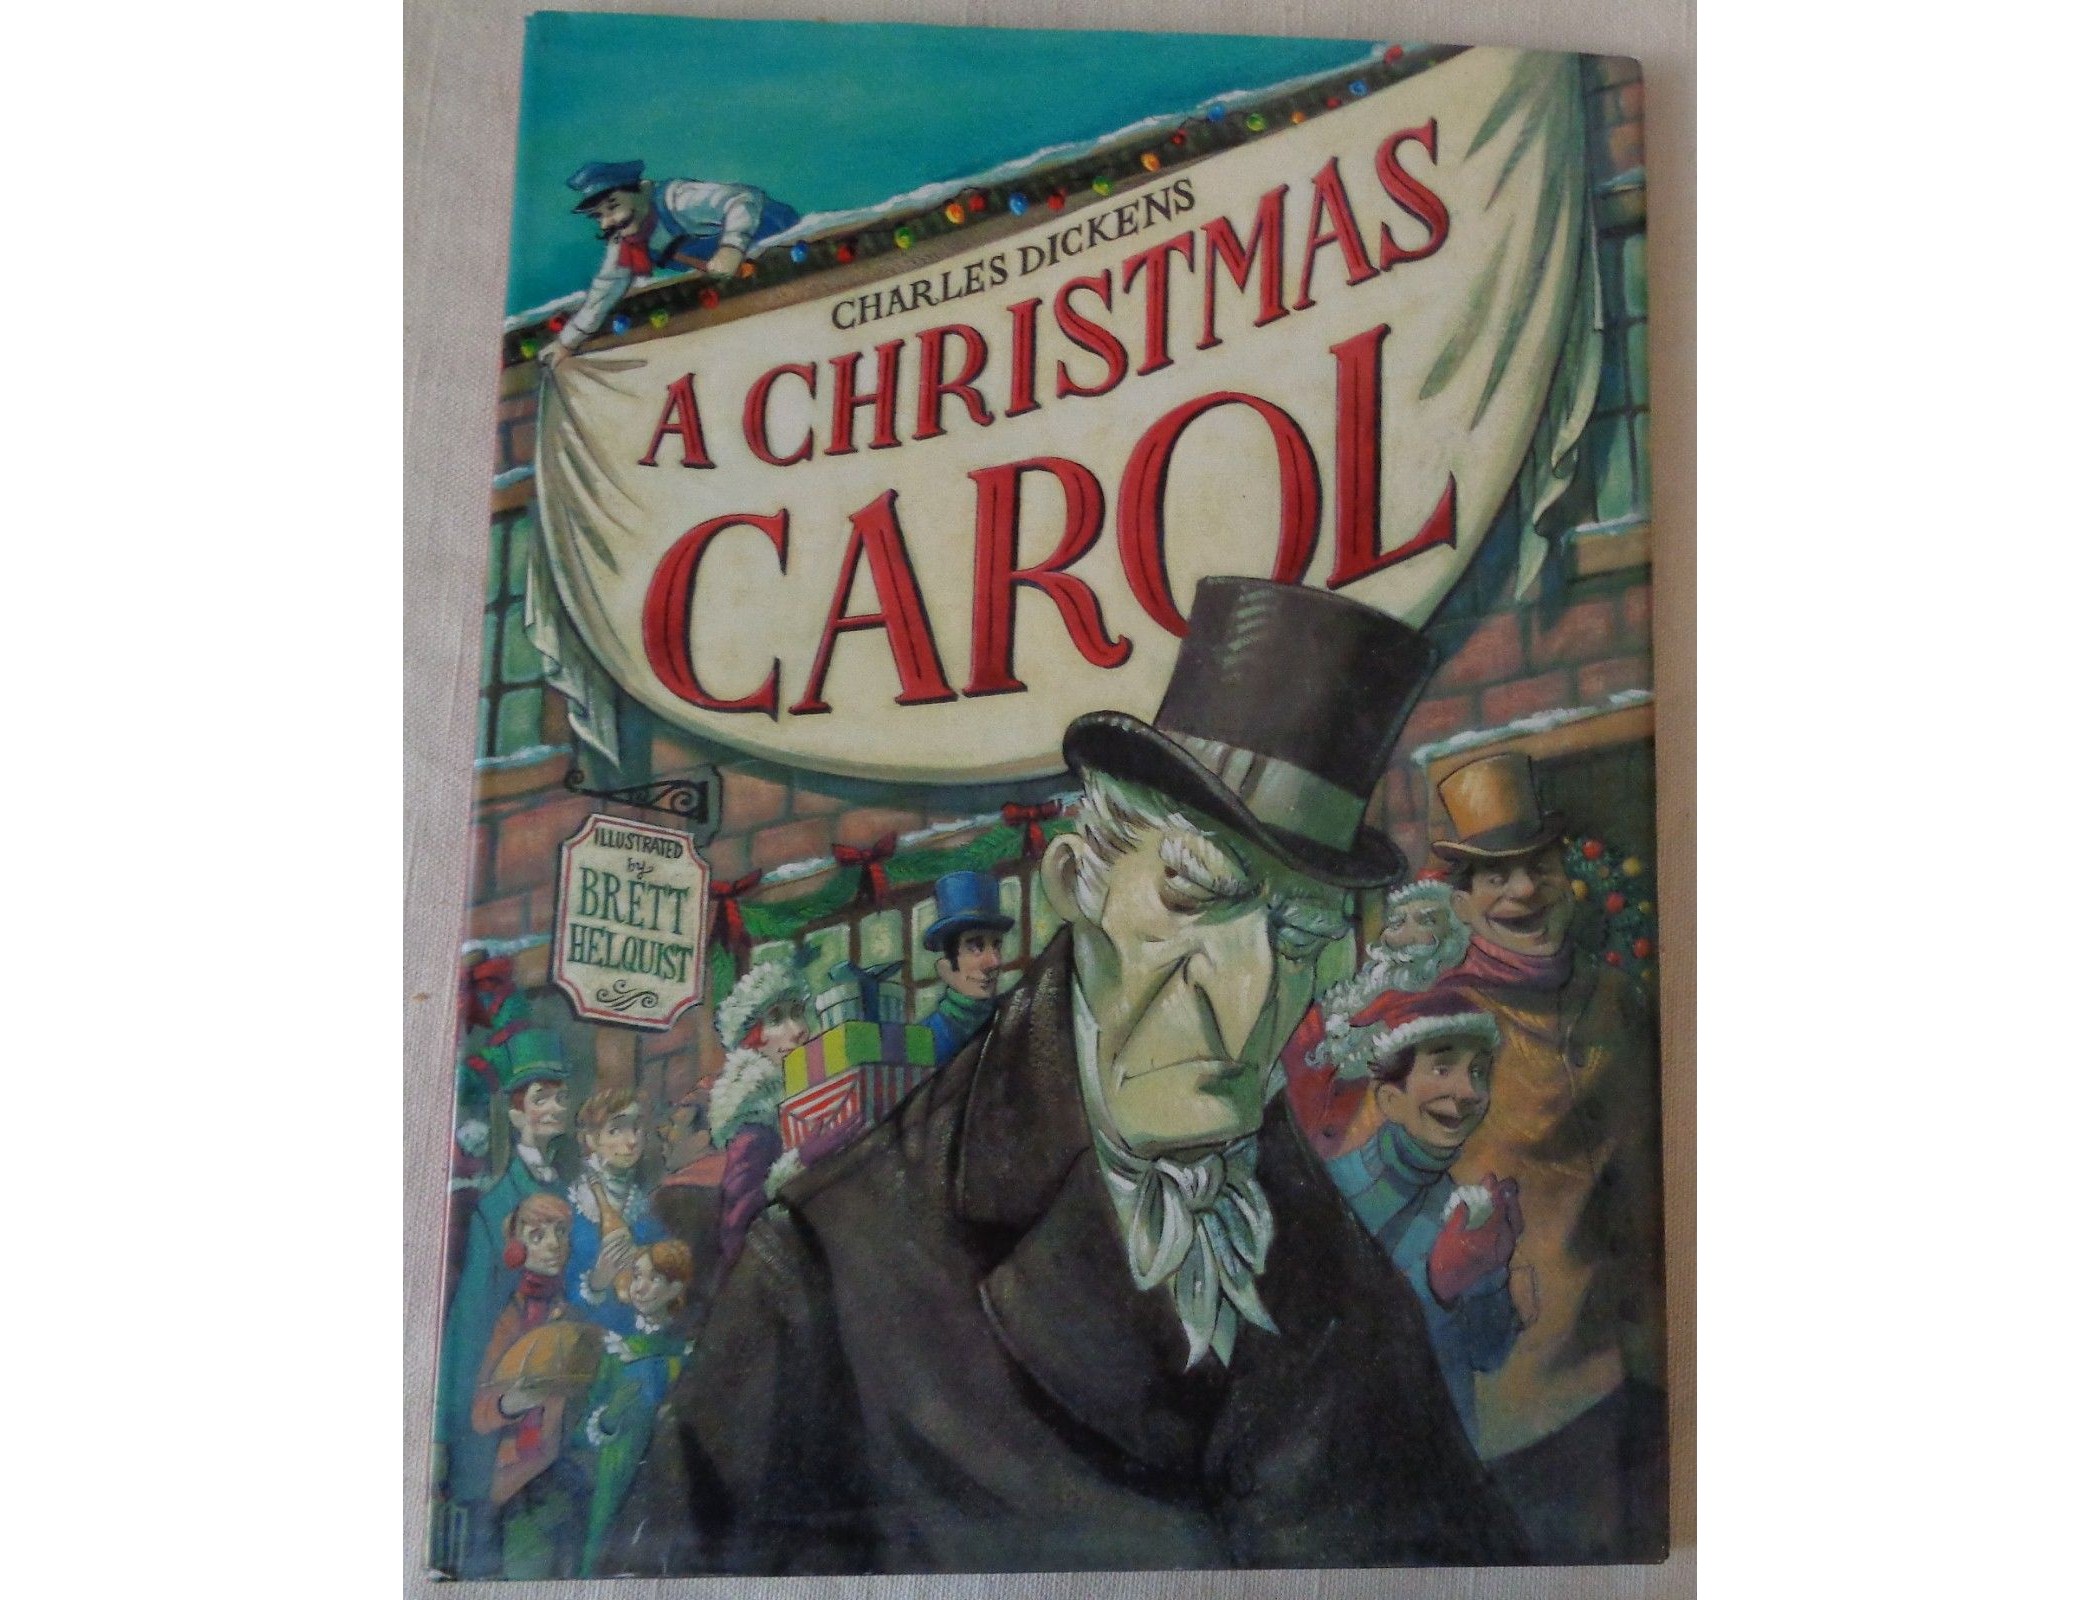 A christmas carol by charles dickens pdf download 0xc00007b windows 10 fix download